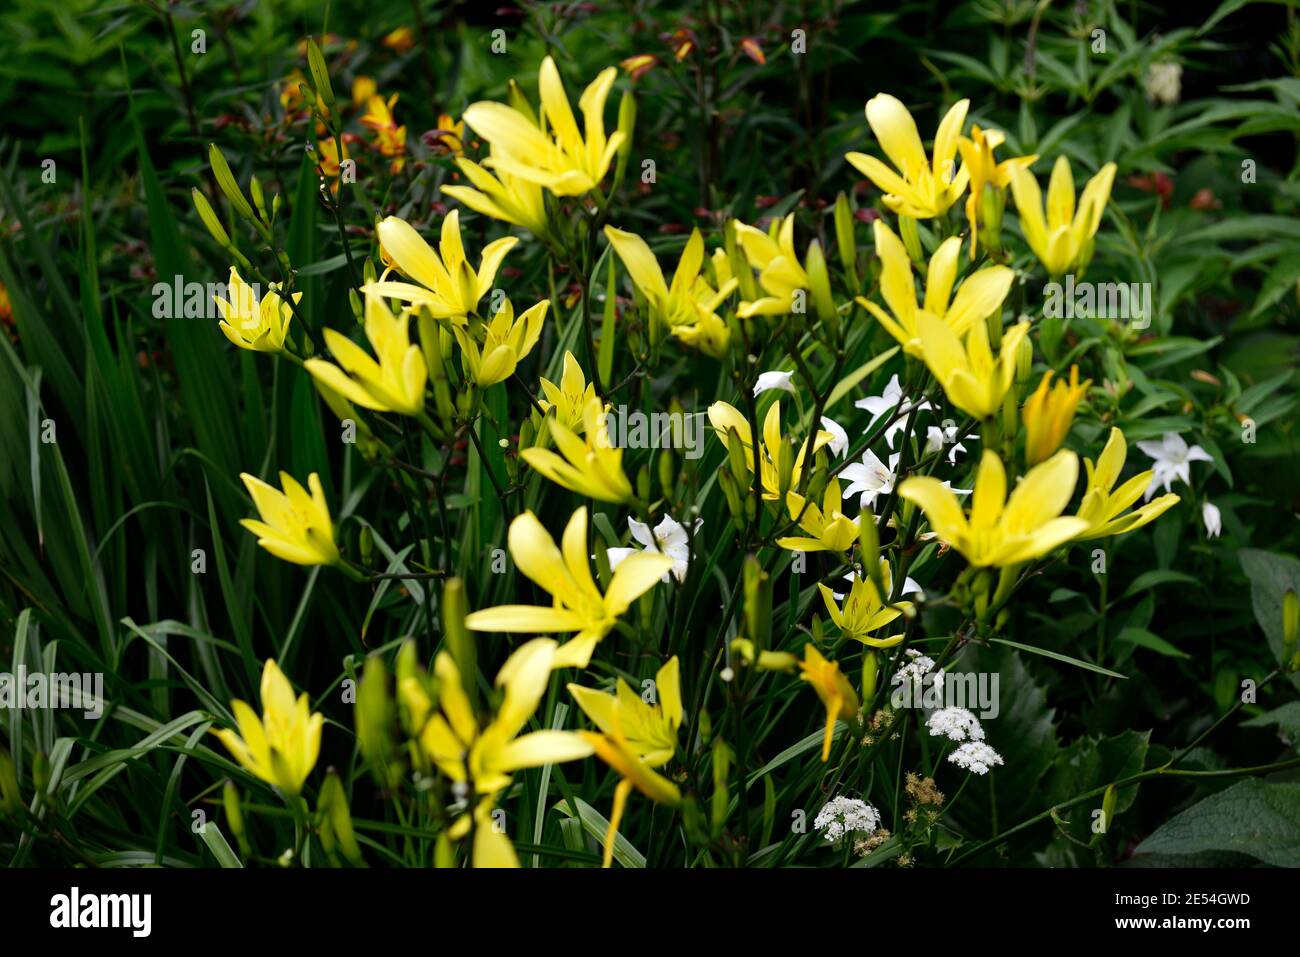 Hemerocallis citrina,Gladiolus nanus The Bride,yellow,white,golden yellow,flowers,flowering,border,mixed border,mixed planting scheme,gardens,garden,R Stock Photo